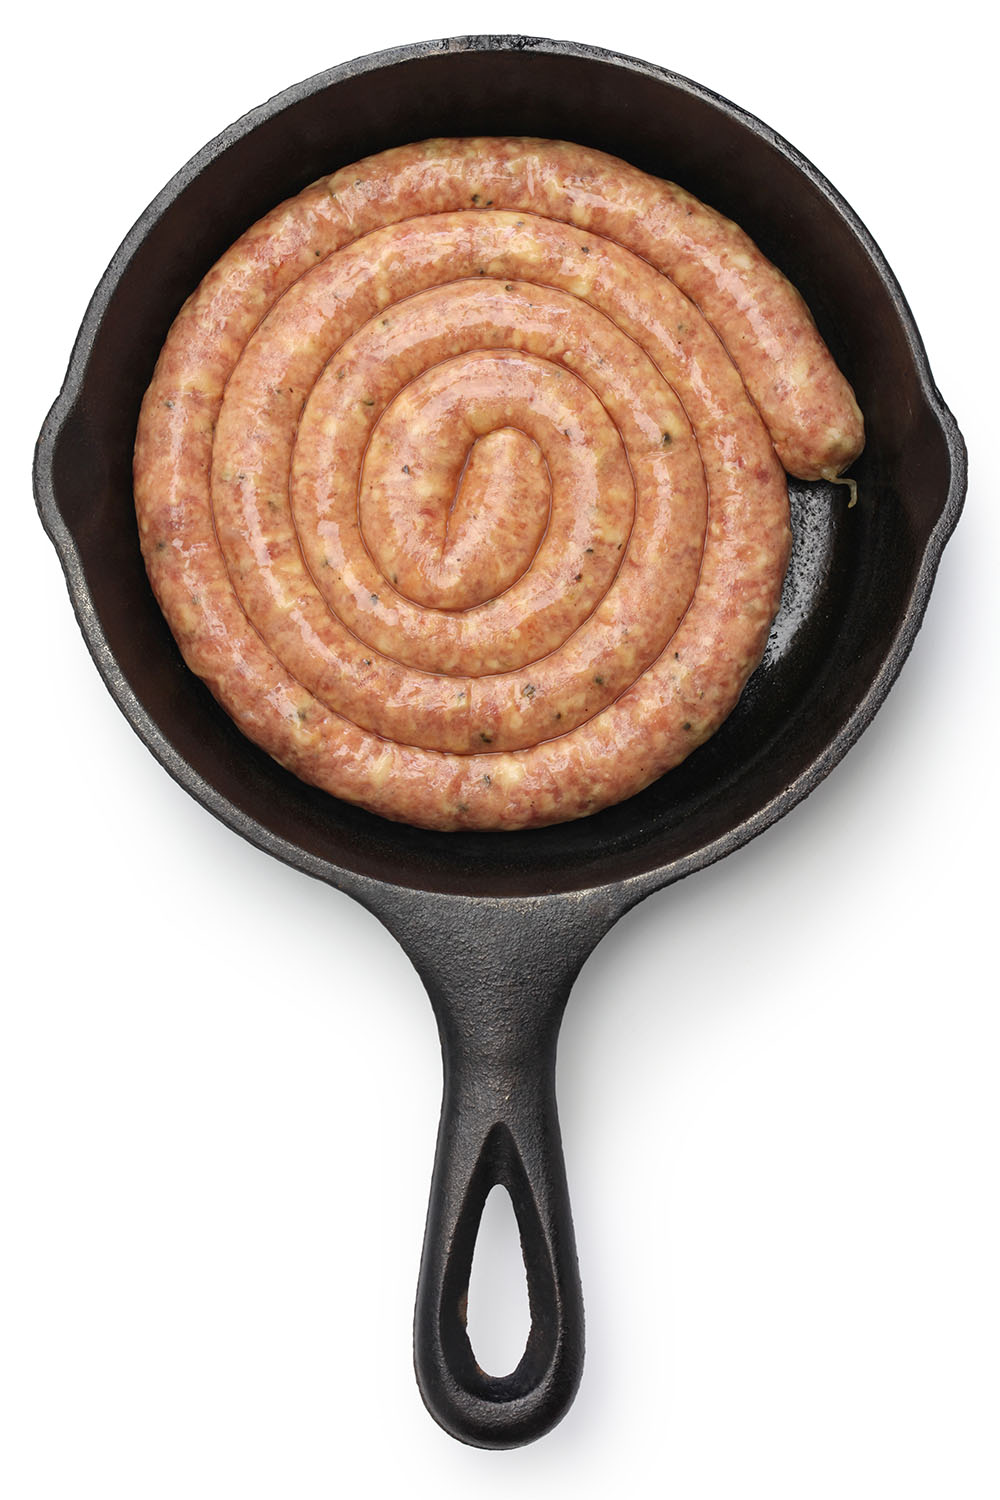 Cumberland Sausage-Traditional